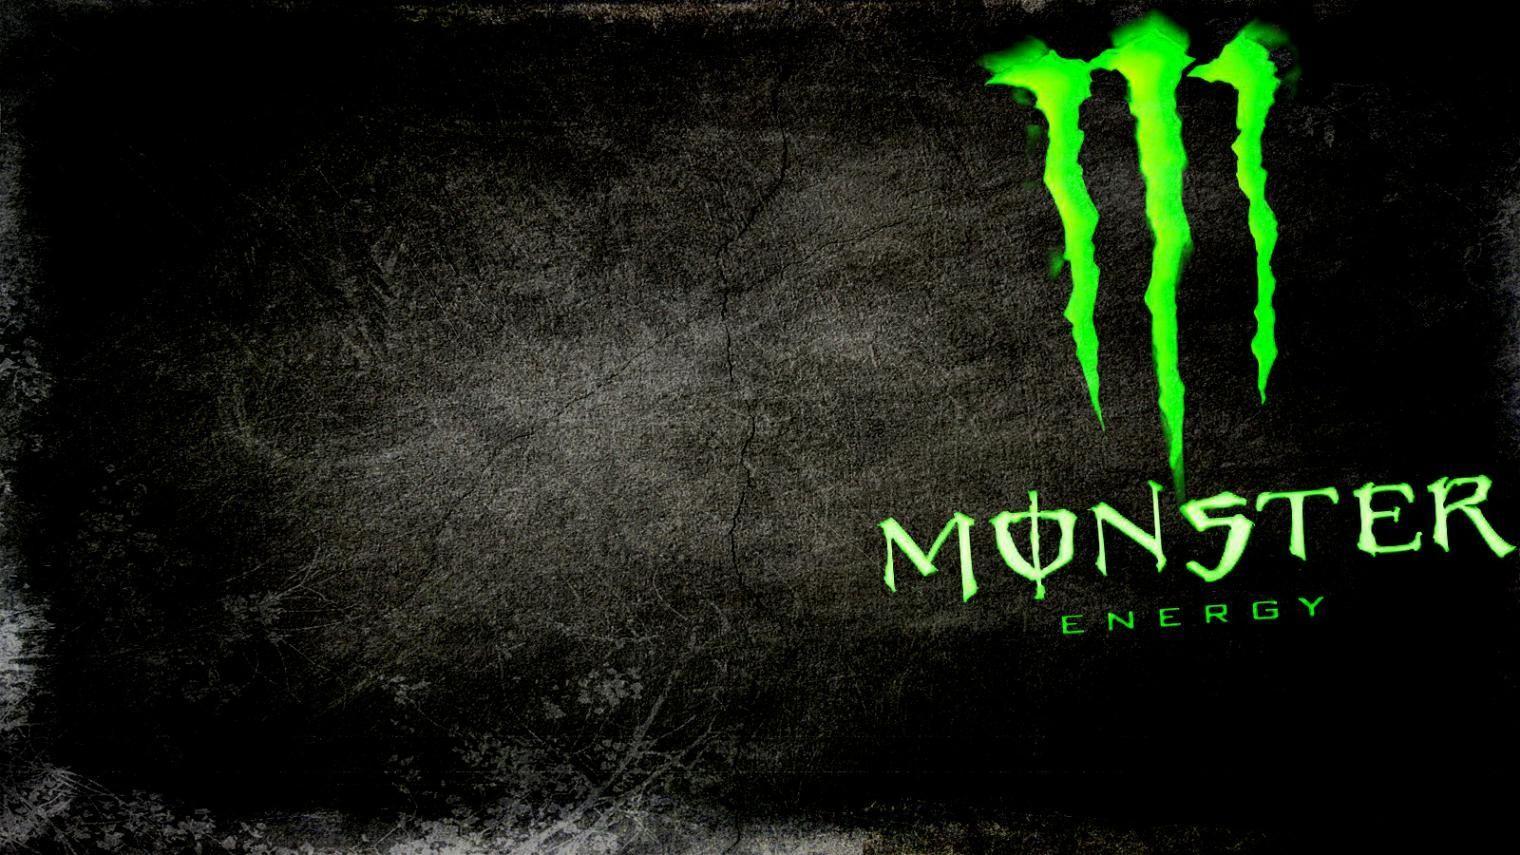 Monster Energy Logo. Wallpaperine. モンスターエナジー, 壁紙, モンスター